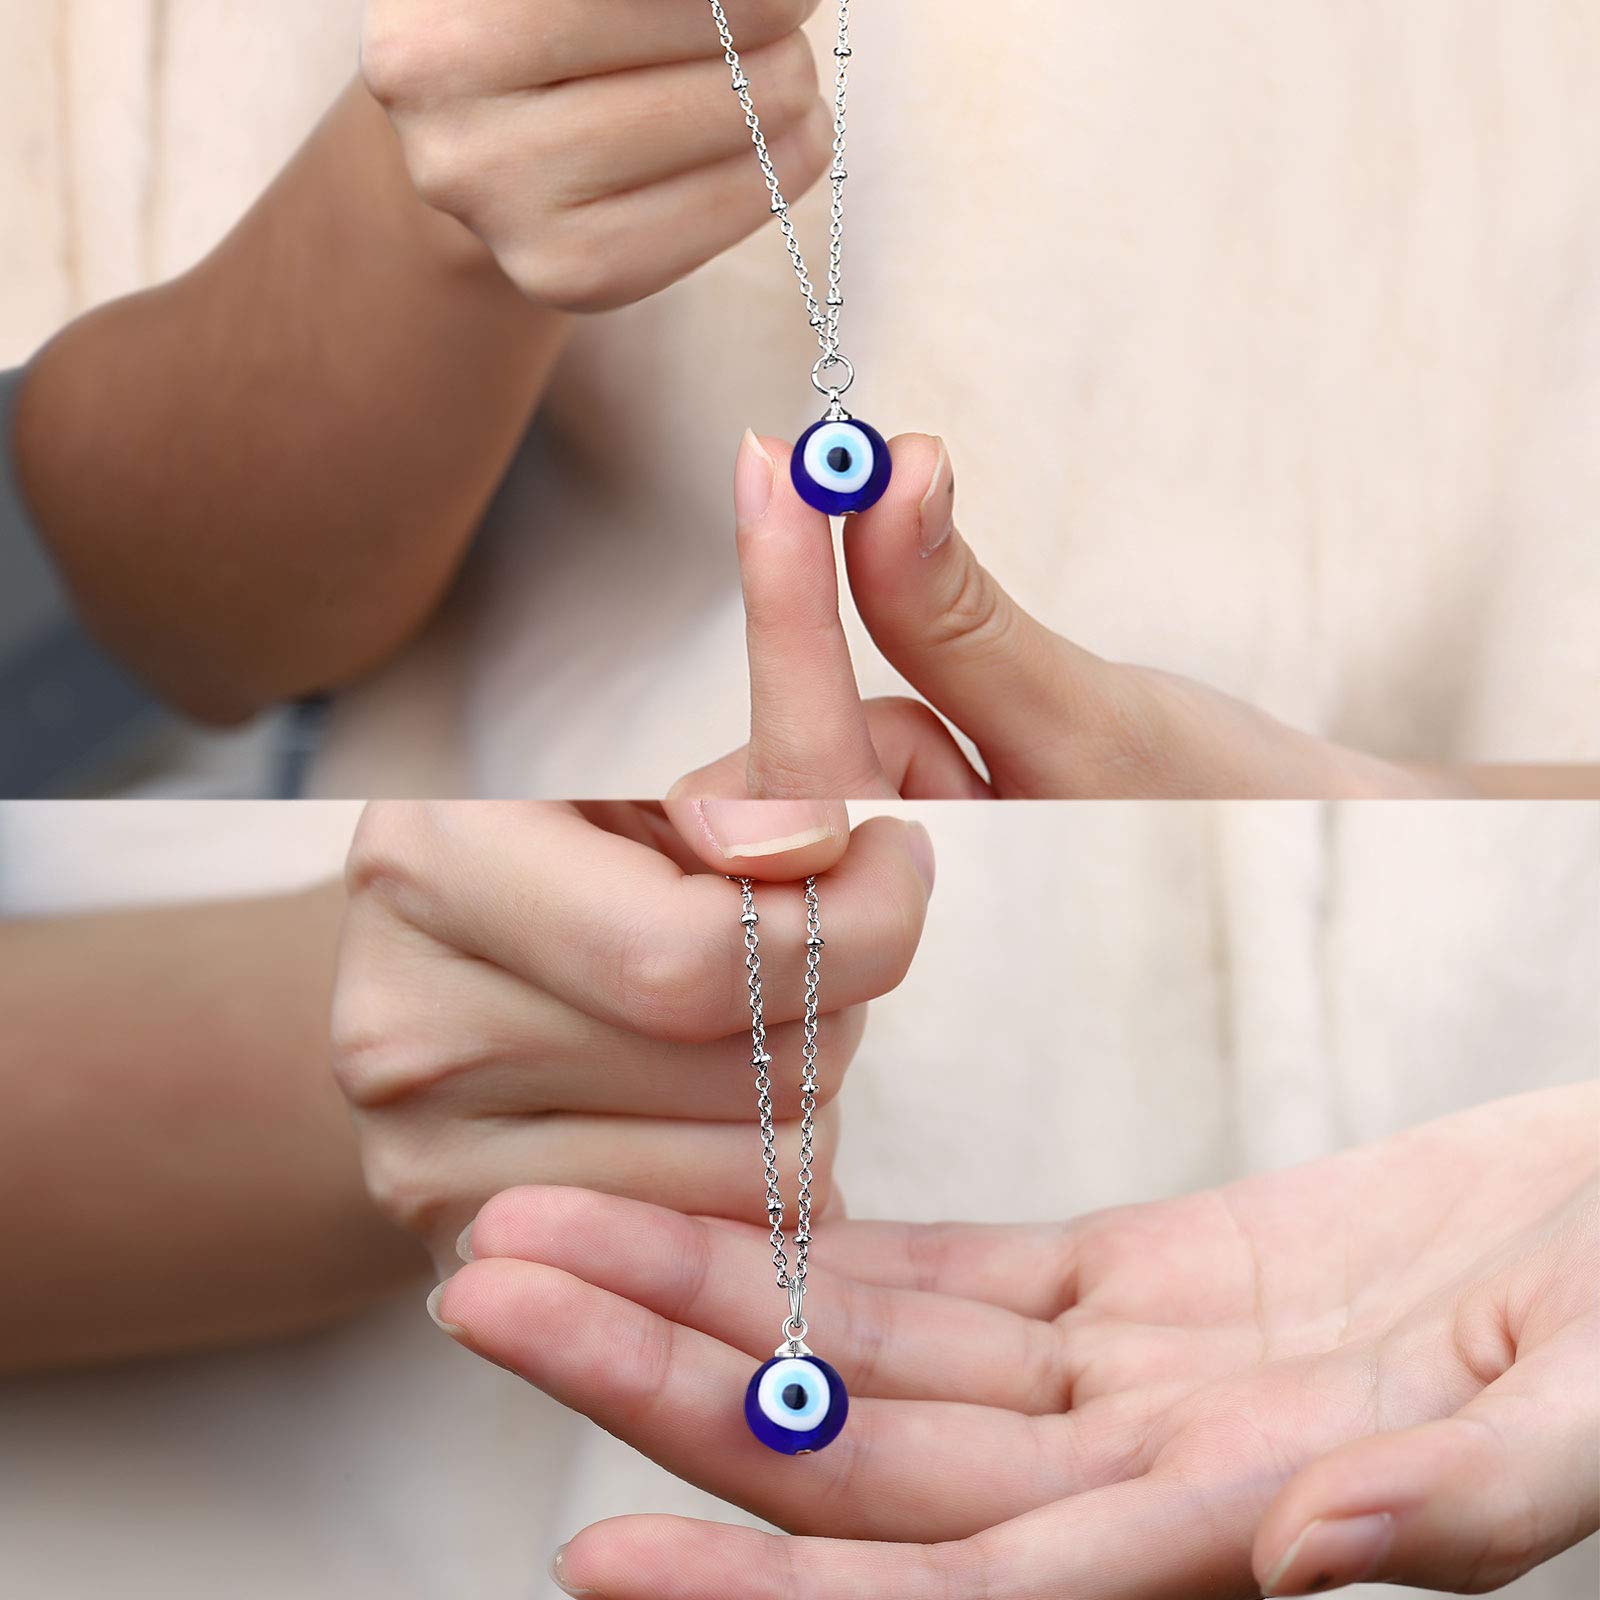 UNGENT THEM Evil Eye Pendant Necklace Third Blue Eyes Amulet Ojo Dainty Necklace for Women Men Girls (Silver/Gold)